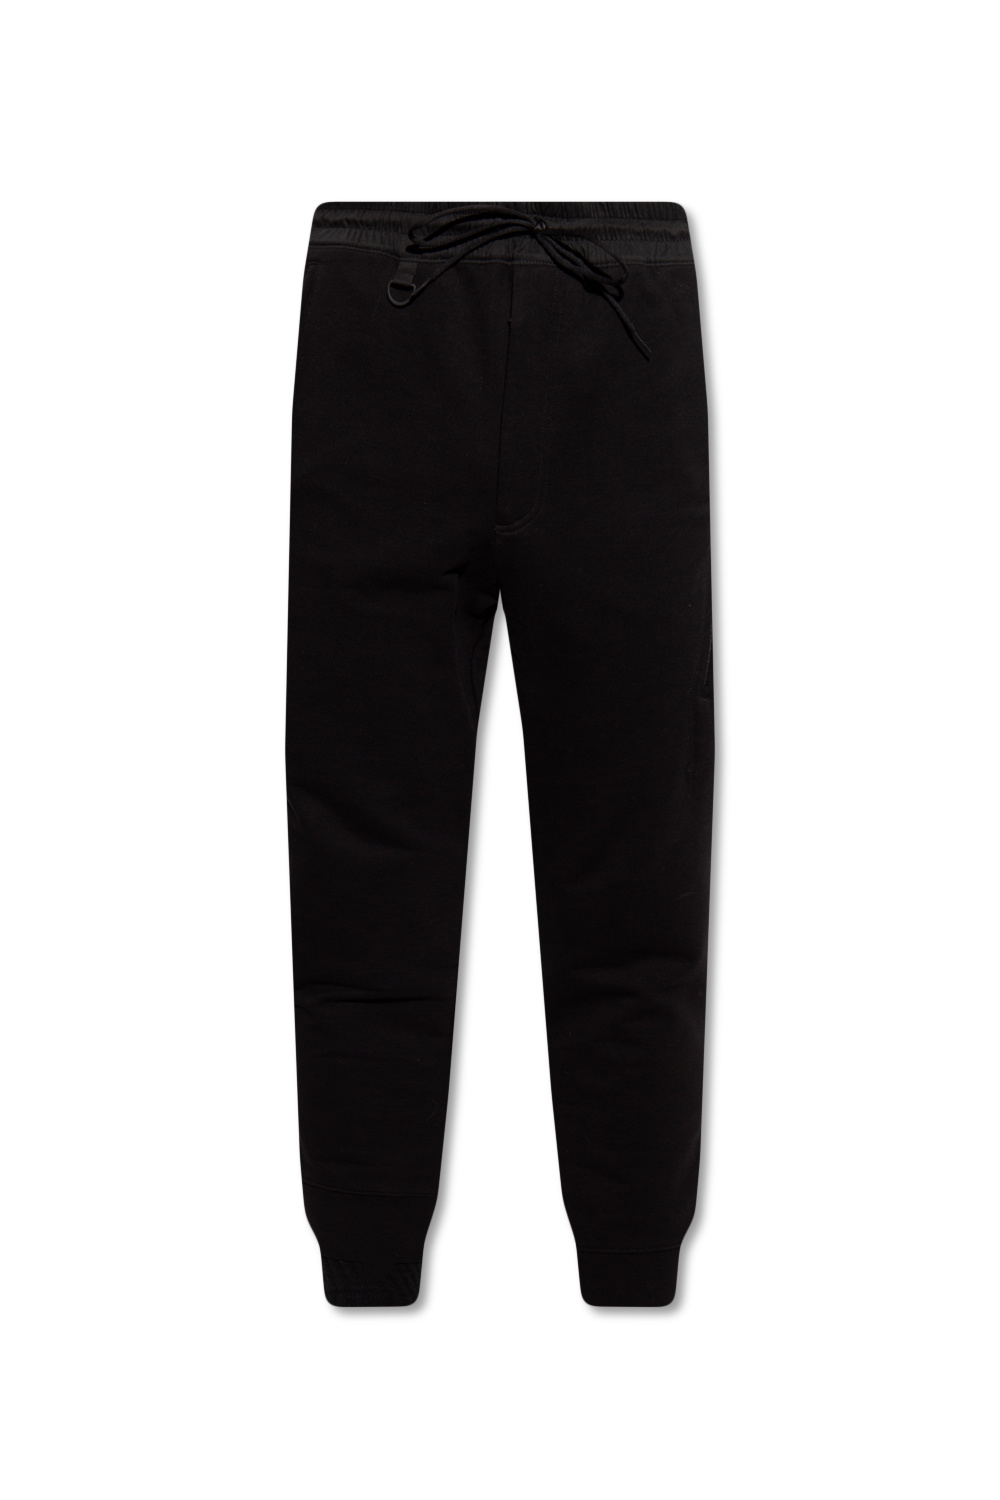 Y-3 Yohji Yamamoto Sweatpants with logo | Men's Clothing | Vitkac